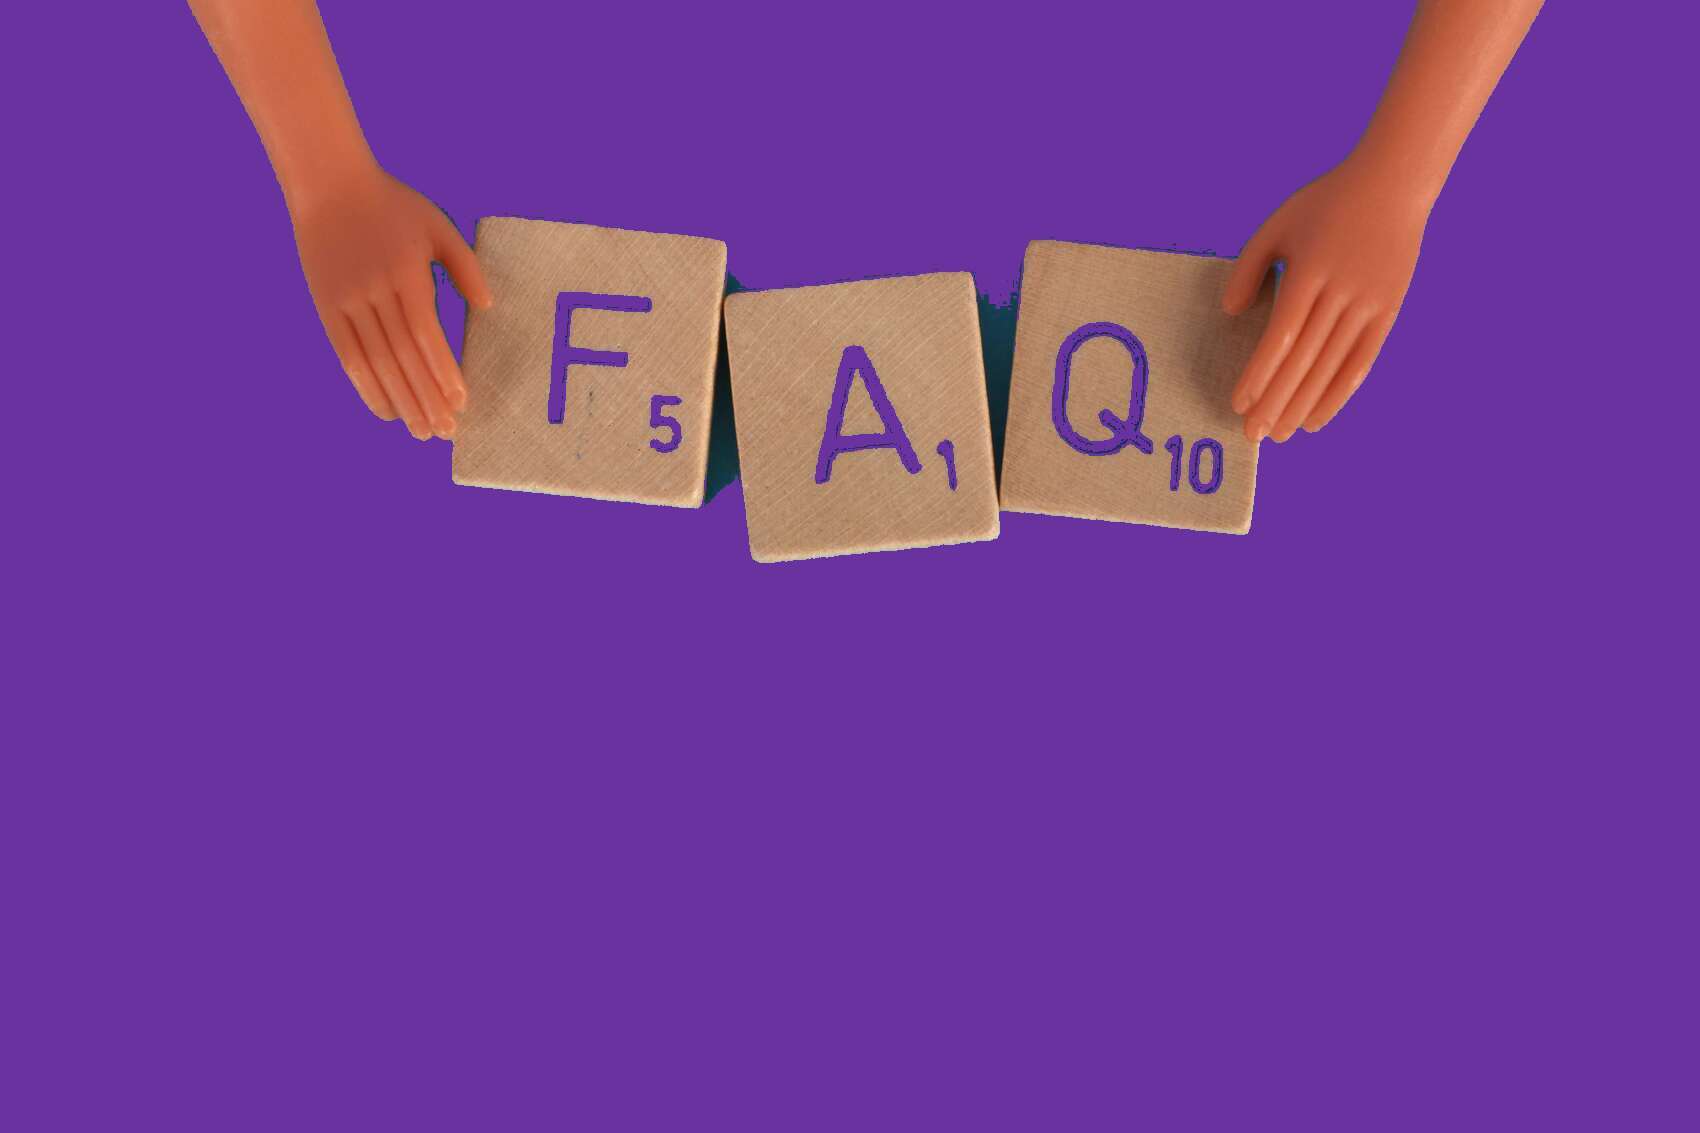 FAQ Scrabble tiles purple